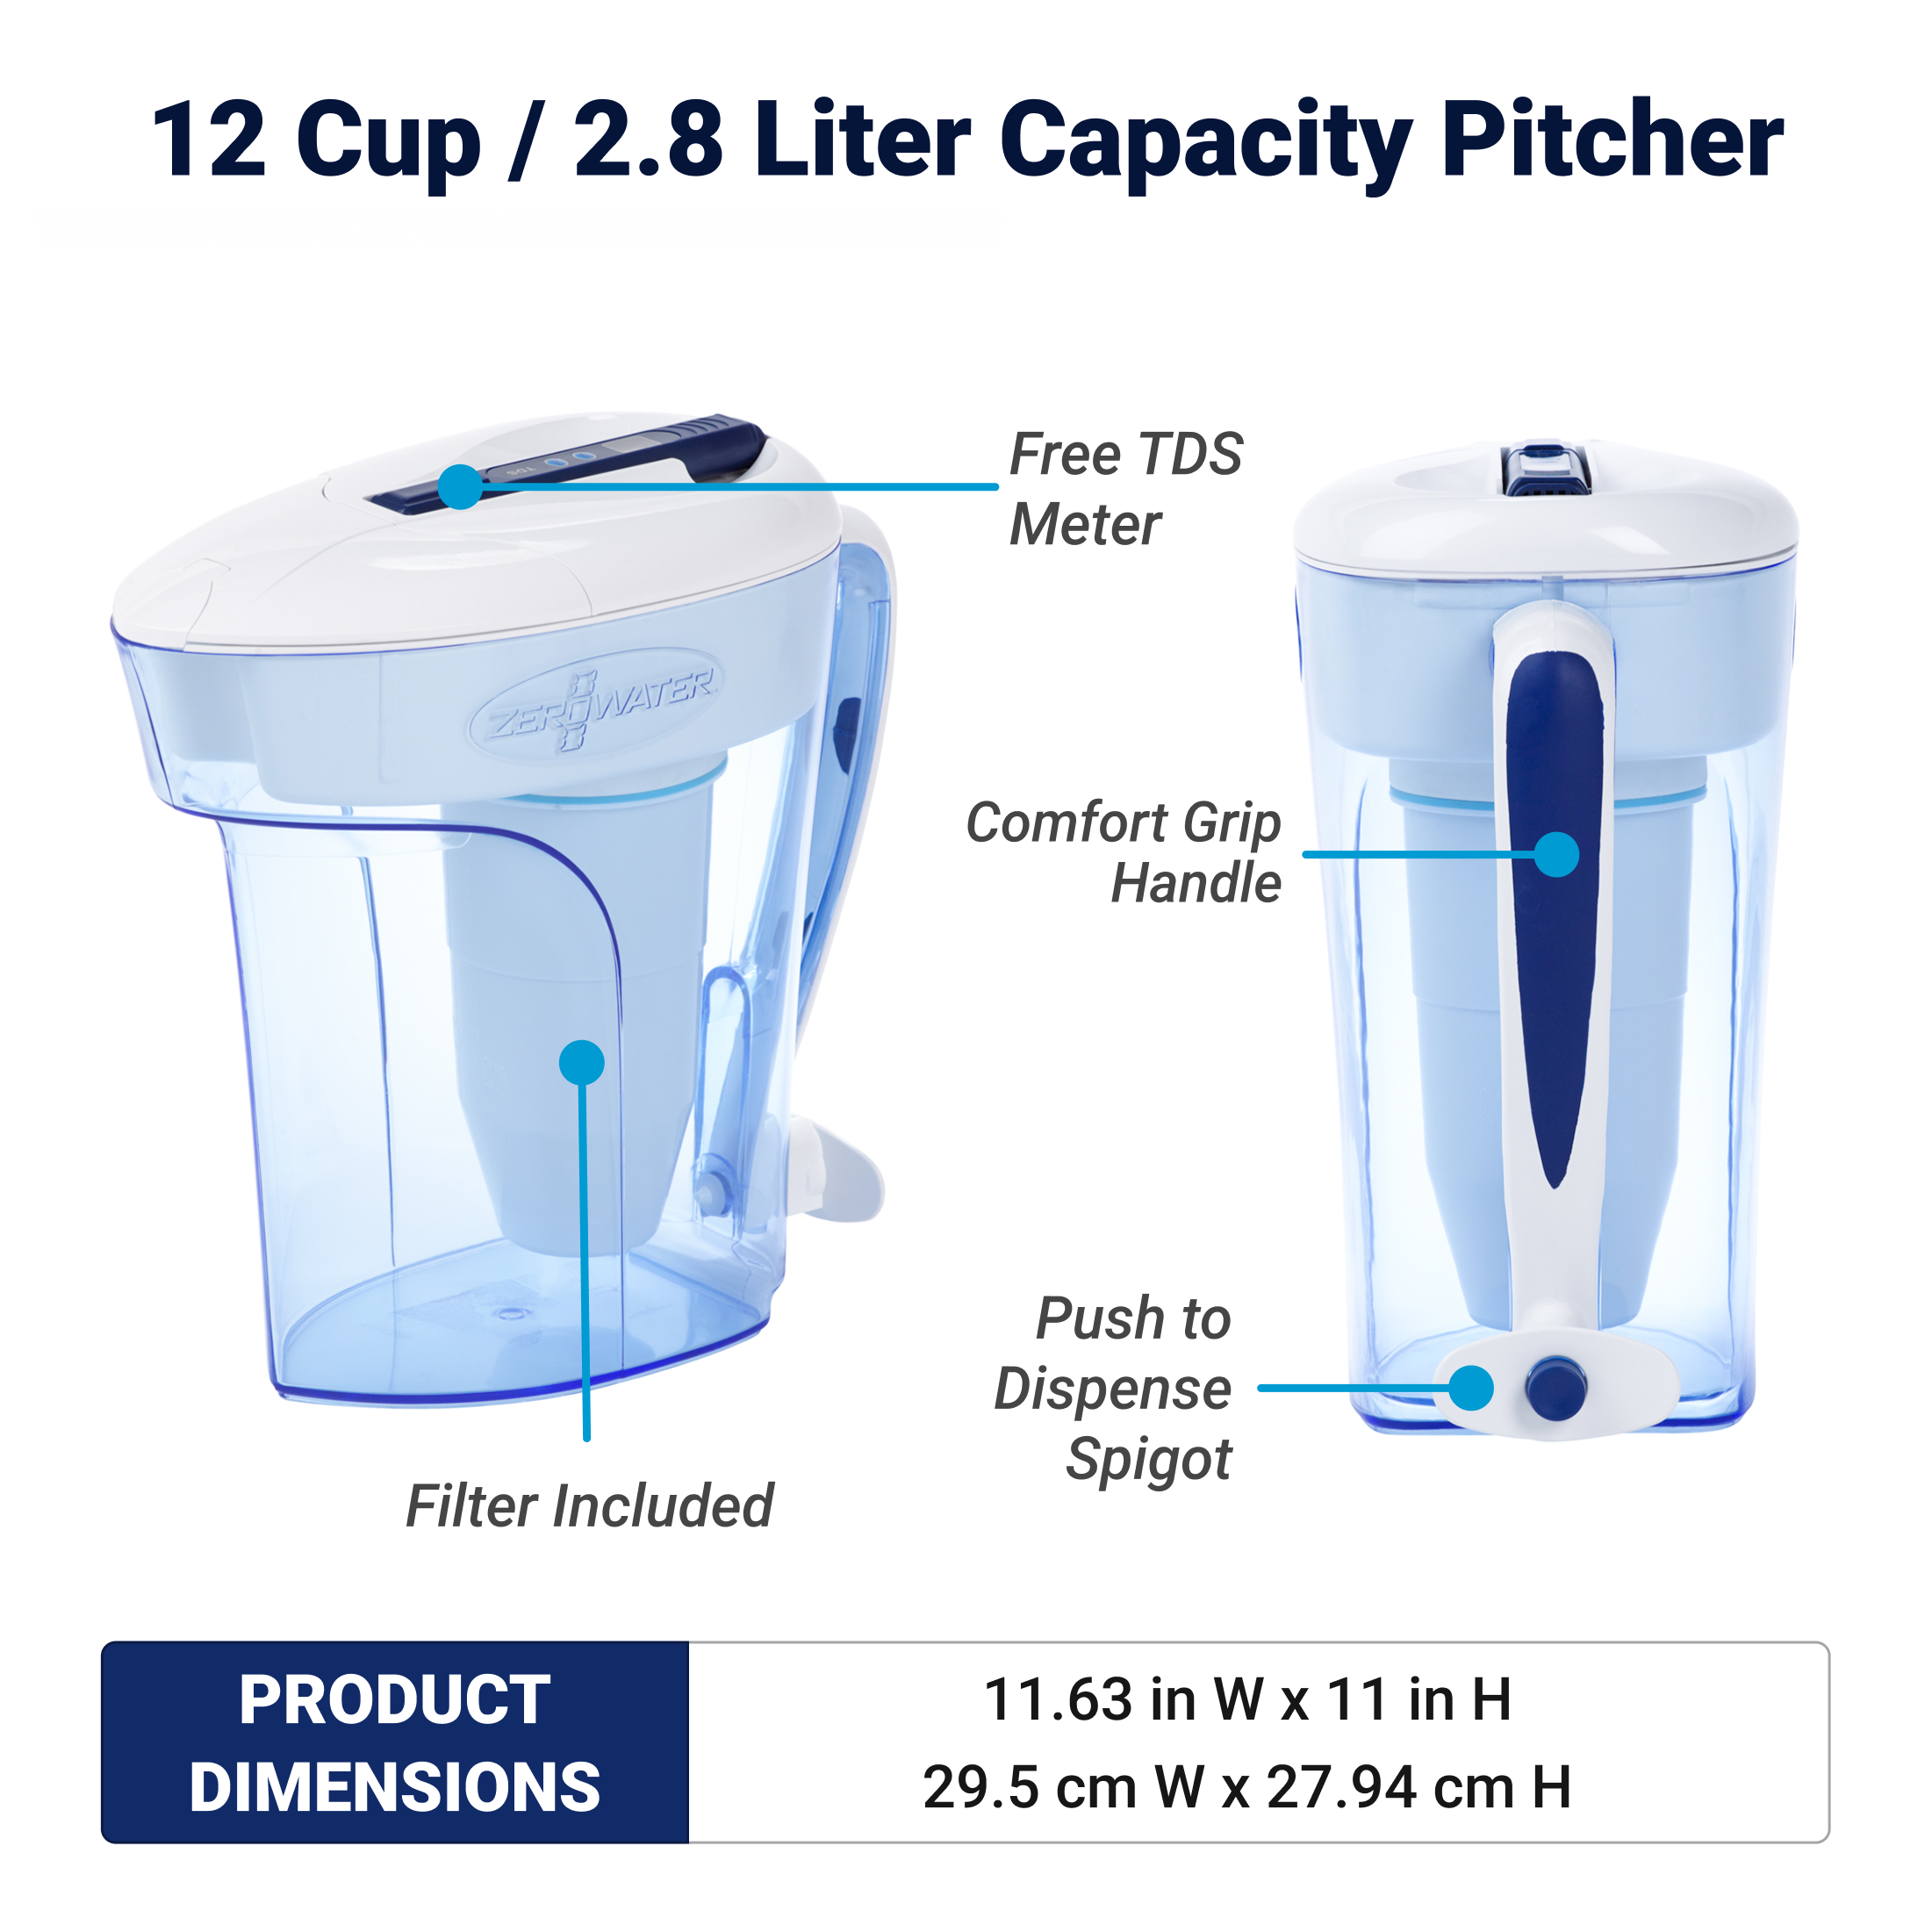 12 cup ready pour pitcher 12 cup 2.8L capacity pitcher